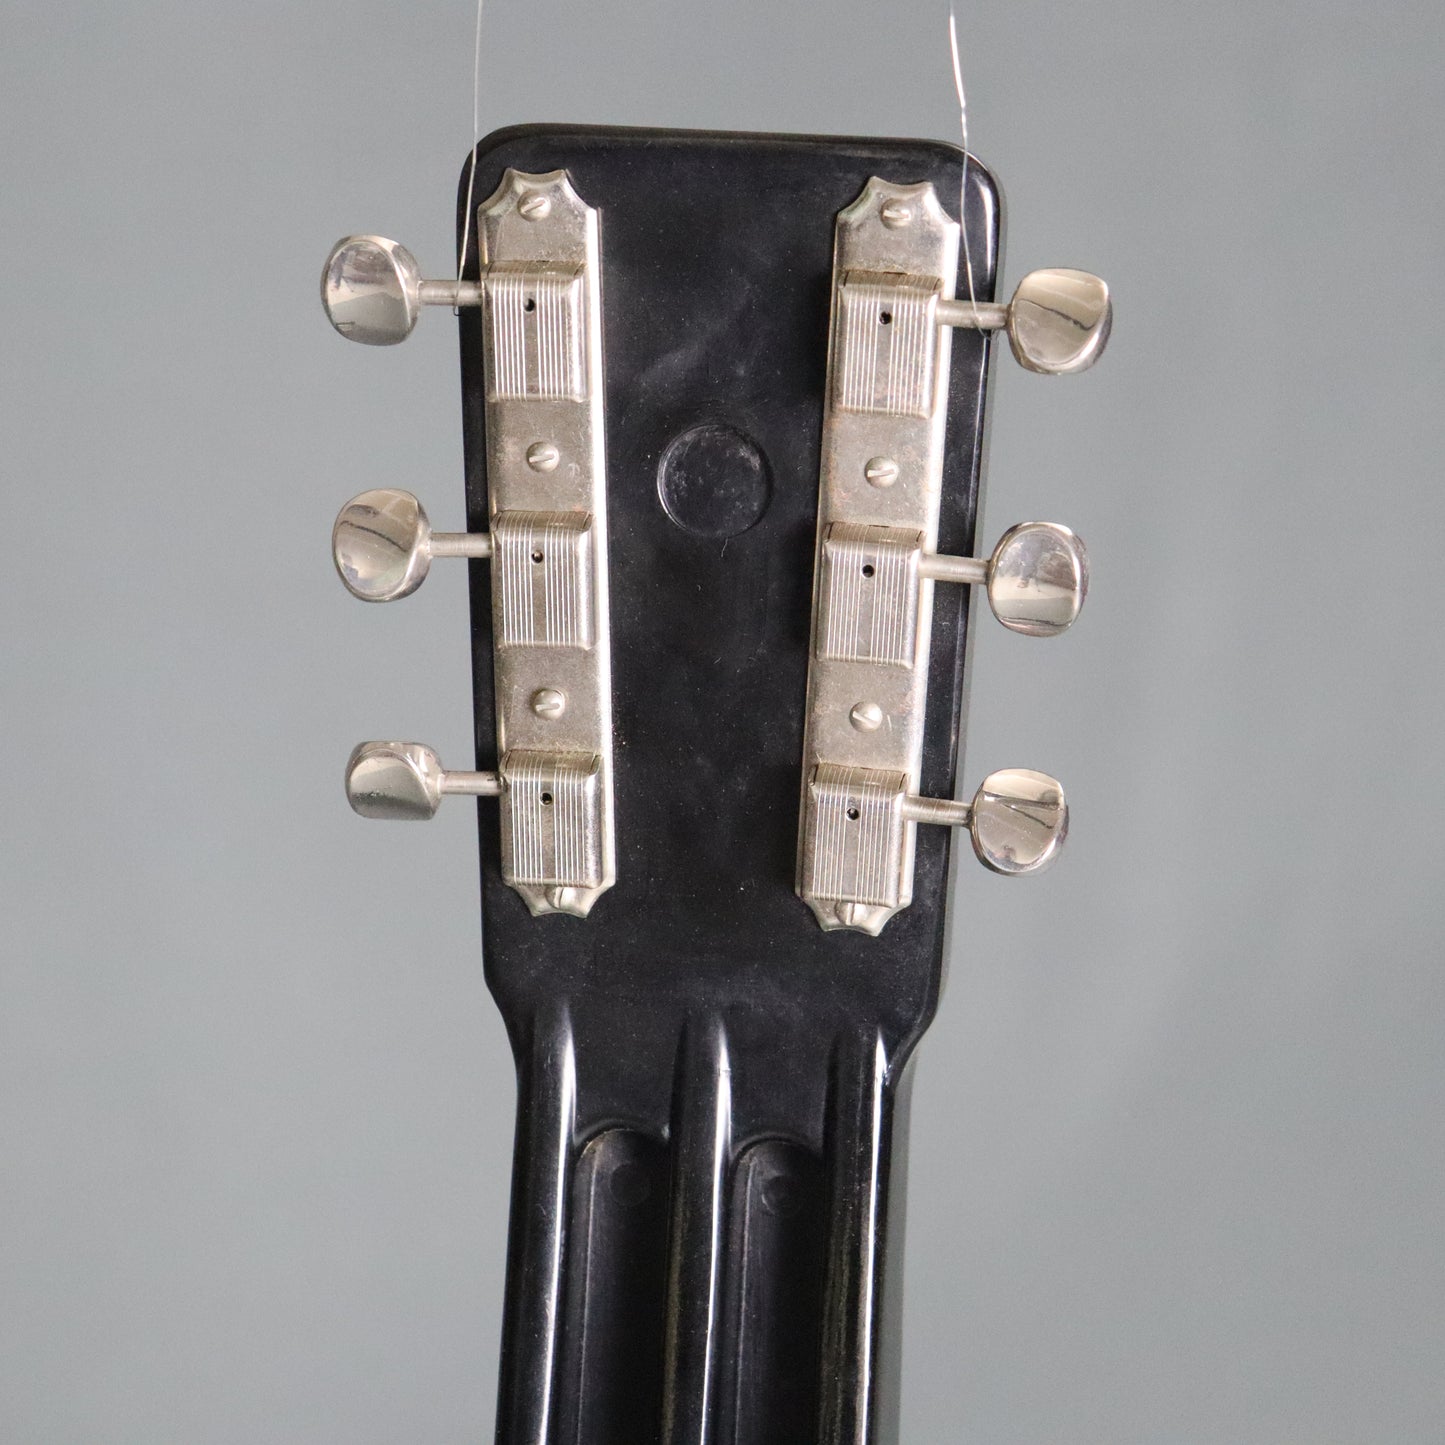 1950 Rickenbacker B-6 Deluxe Hawaiian Lap Steel Guitar "Panda" Lapsteel